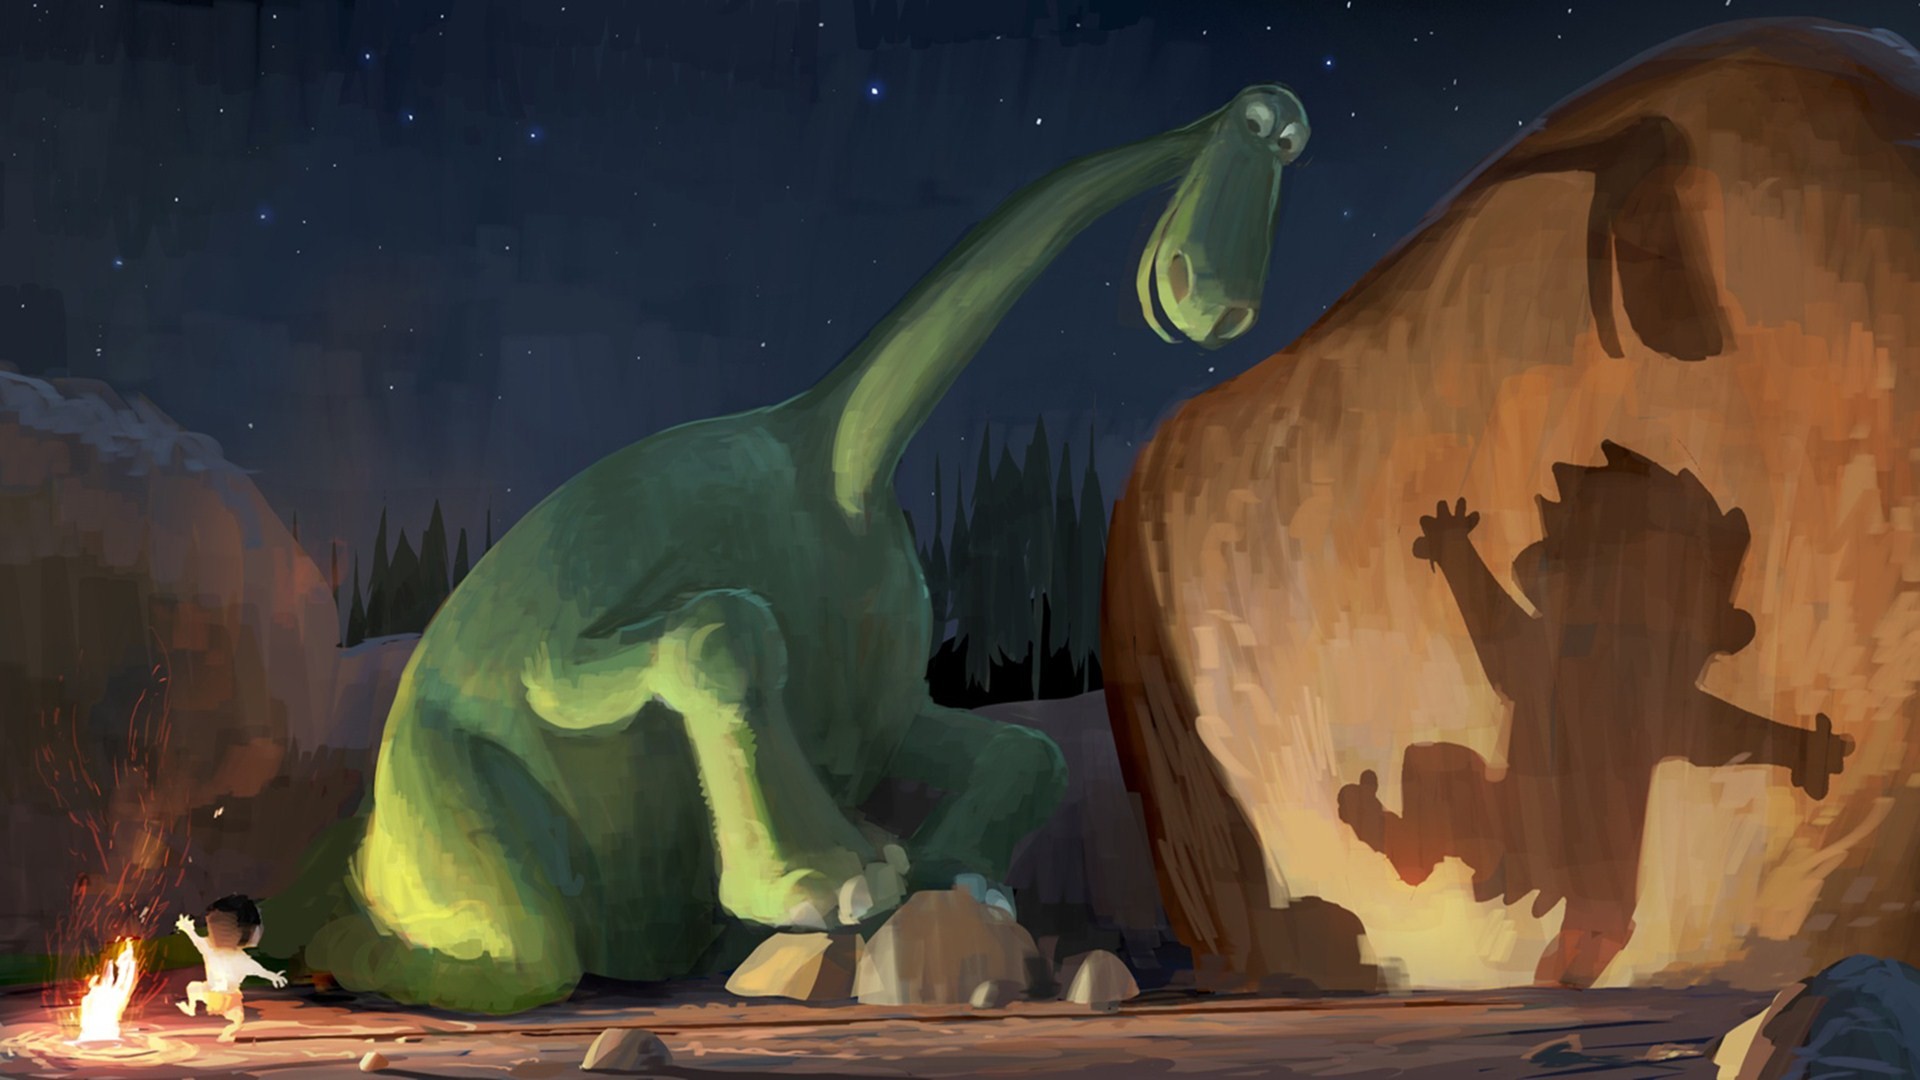 General 1920x1080 digital art animals nature Pixar Animation Studios dinosaurs The Good Dinosaur stones night fire shadow stars dancing movies animated movies